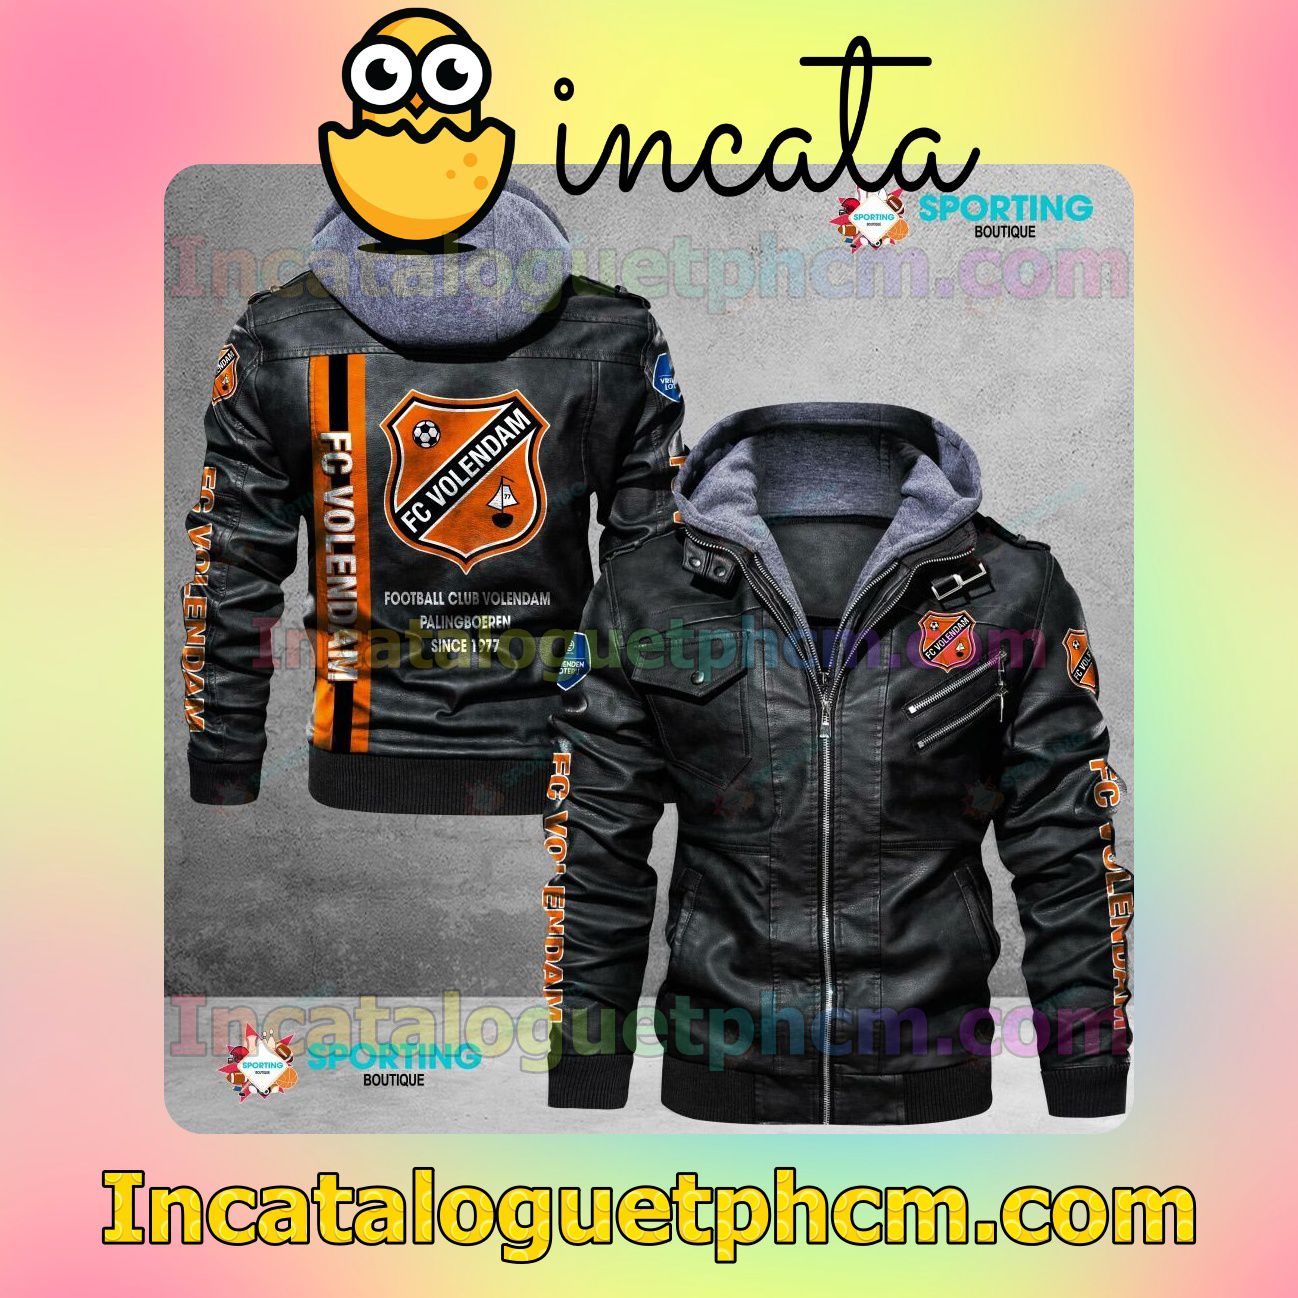 FC Volendam Brand Uniform Leather Jacket